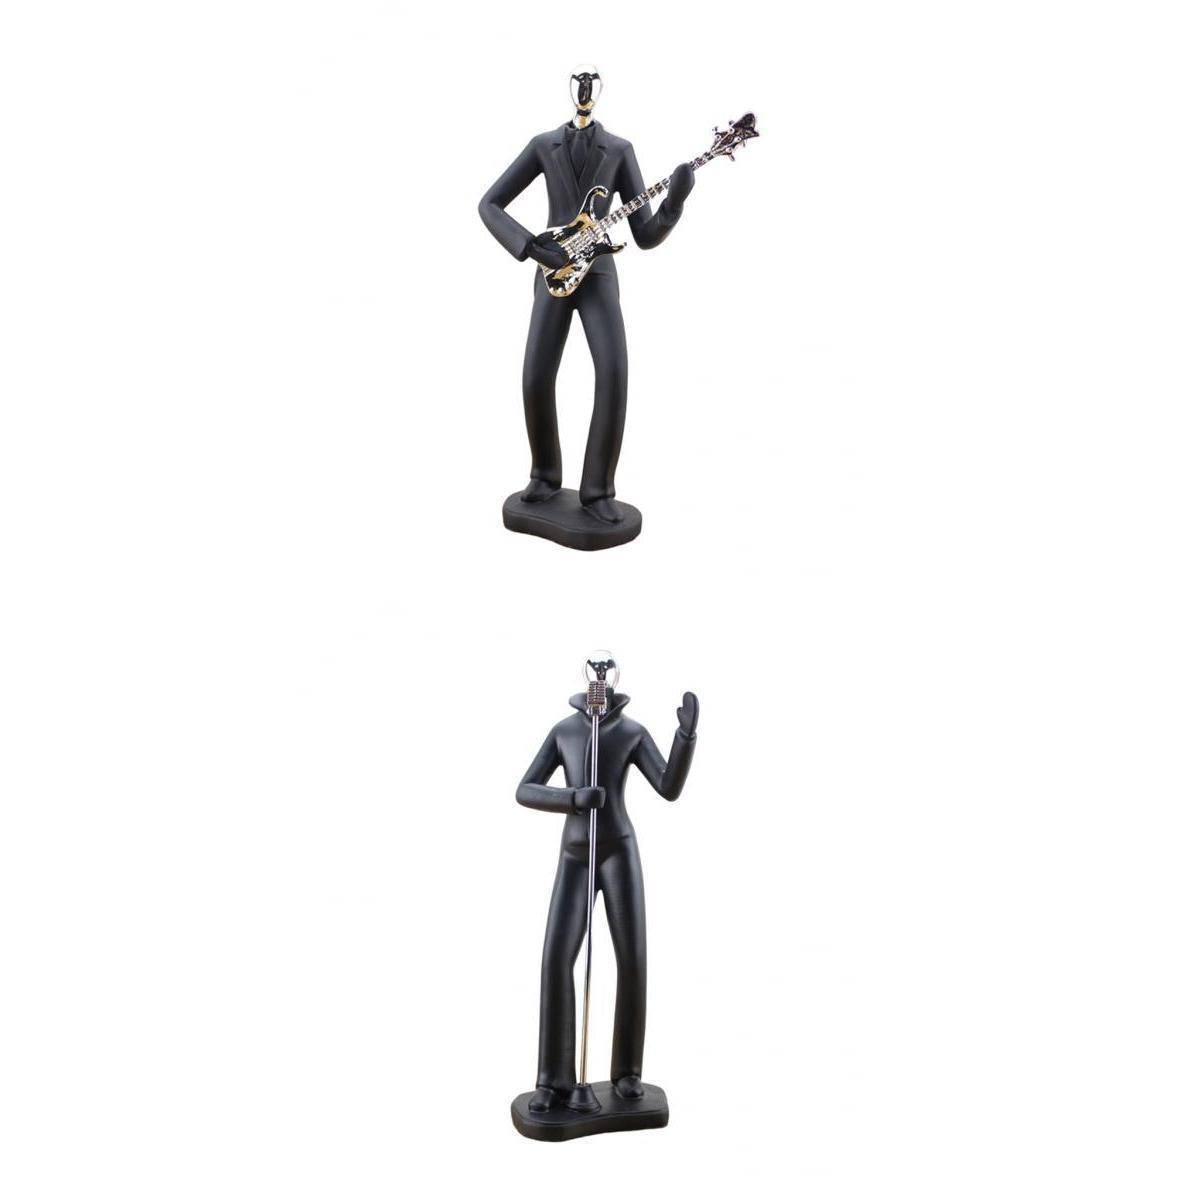 2x Music Instrument Player Sculpture Figurine Supplies Office Ornament